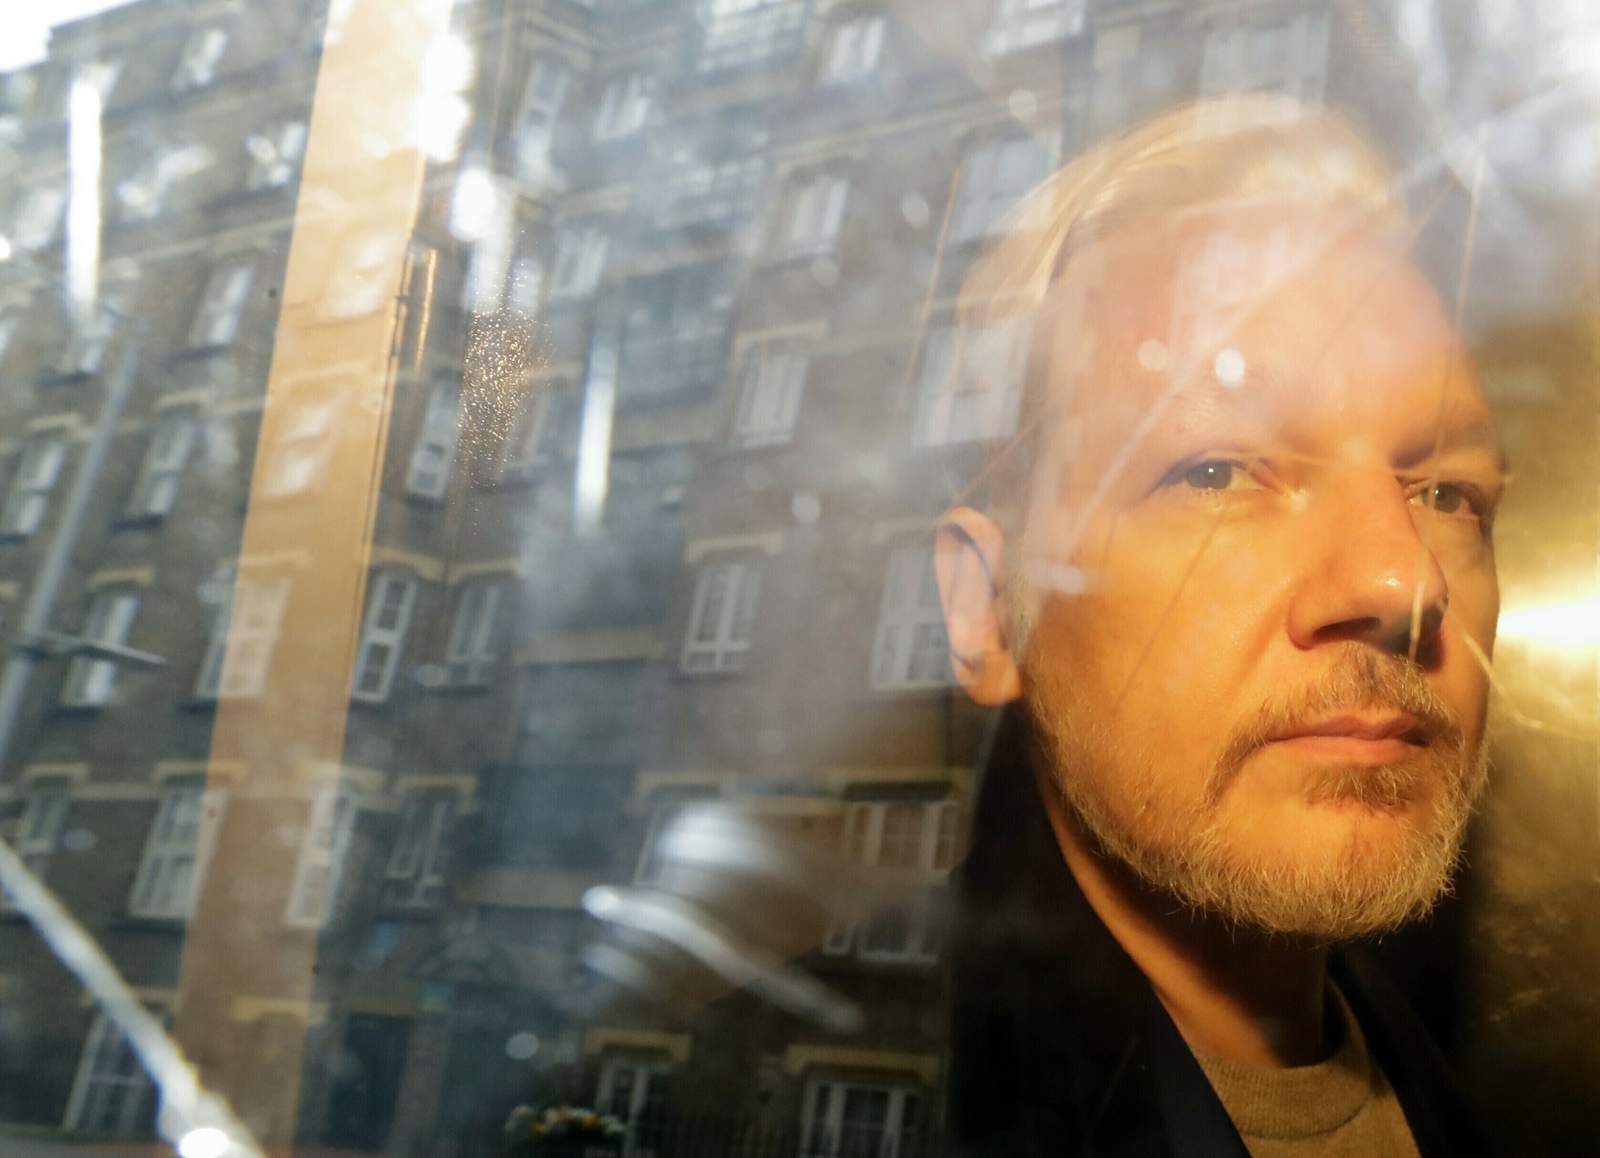 Timeline of Julian Assange's legal battles over past decade